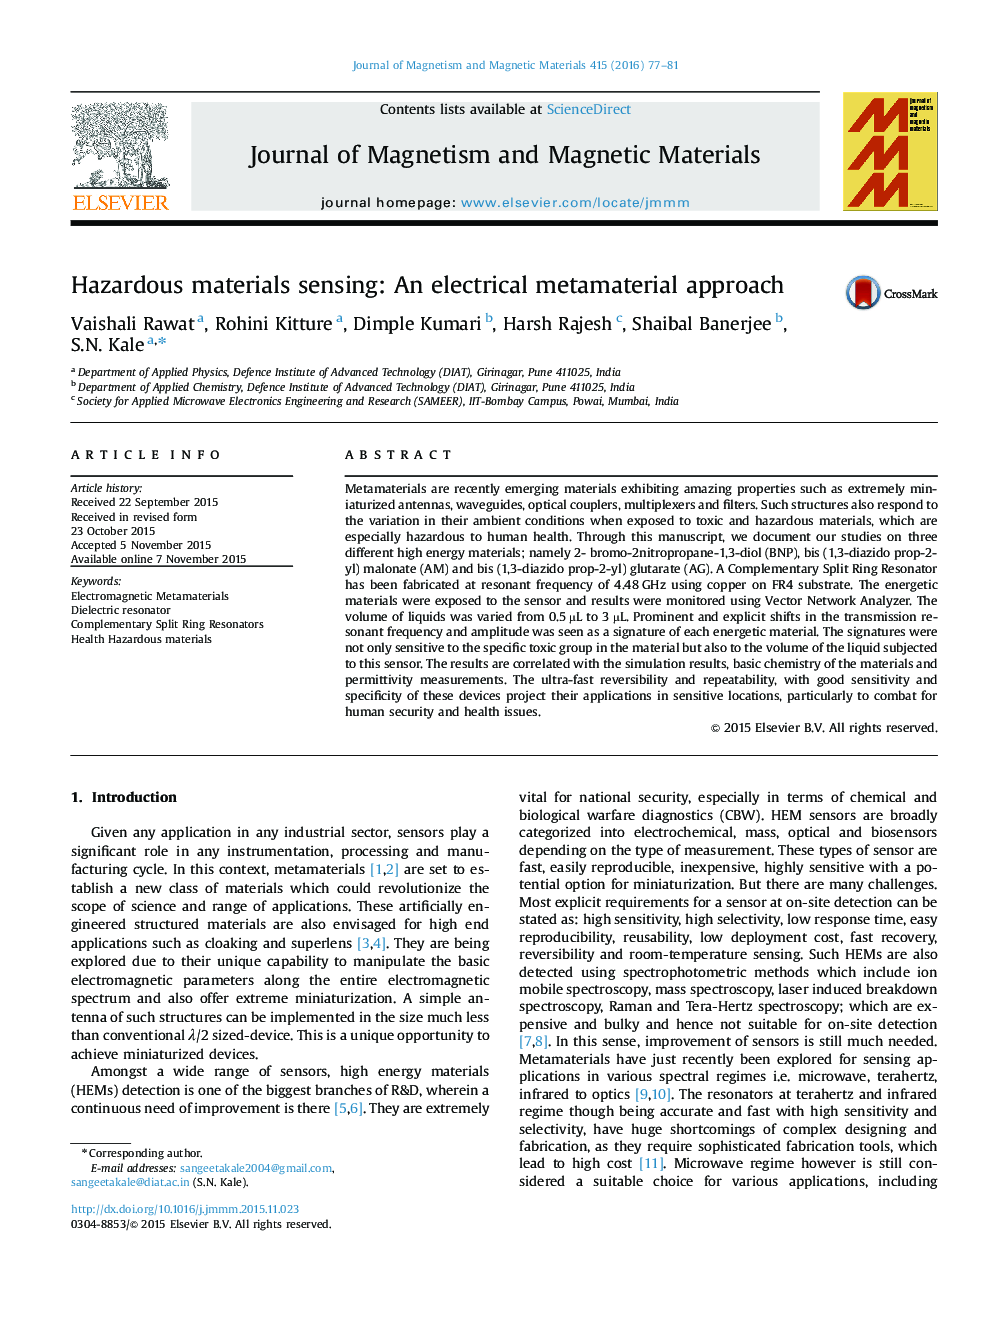 Hazardous materials sensing: An electrical metamaterial approach